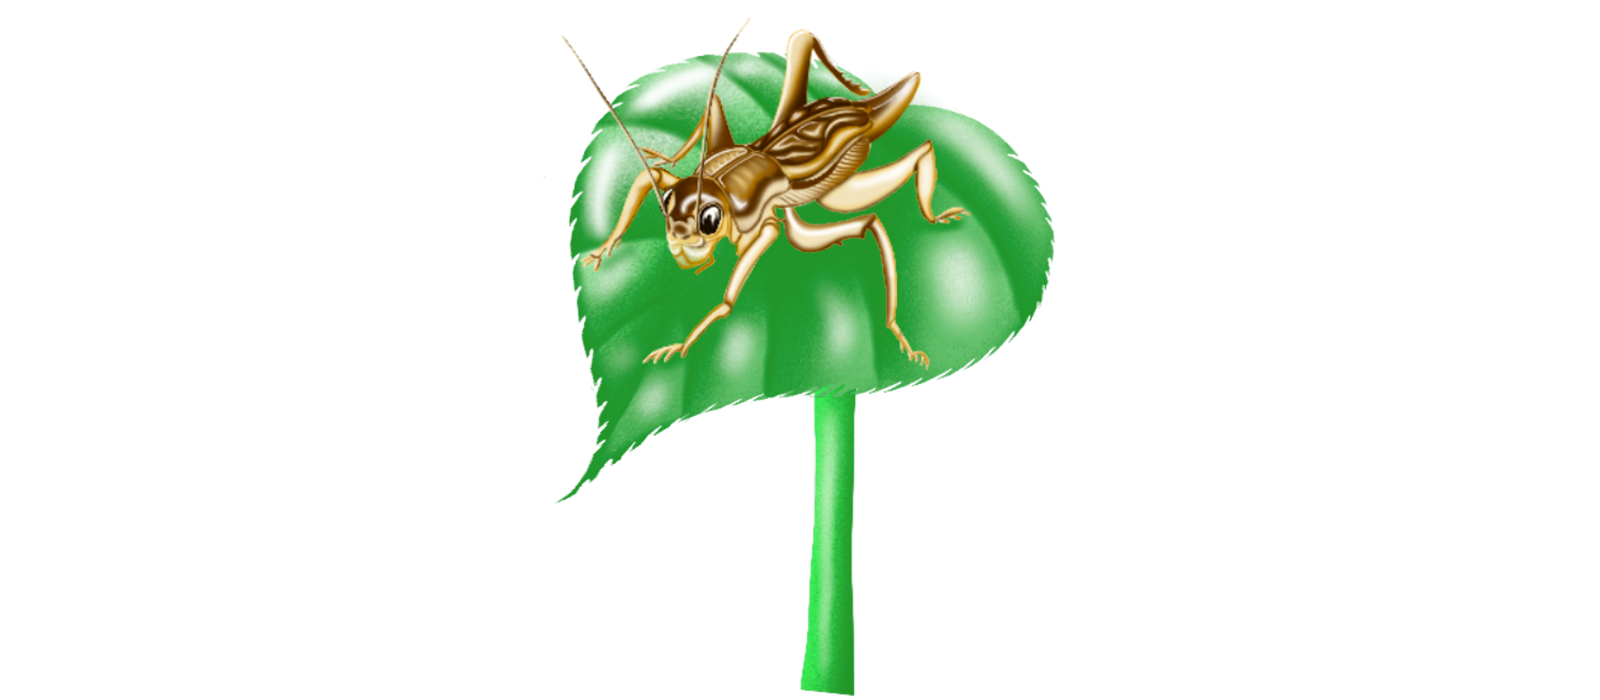 Illustration of cricket sitting on leaf